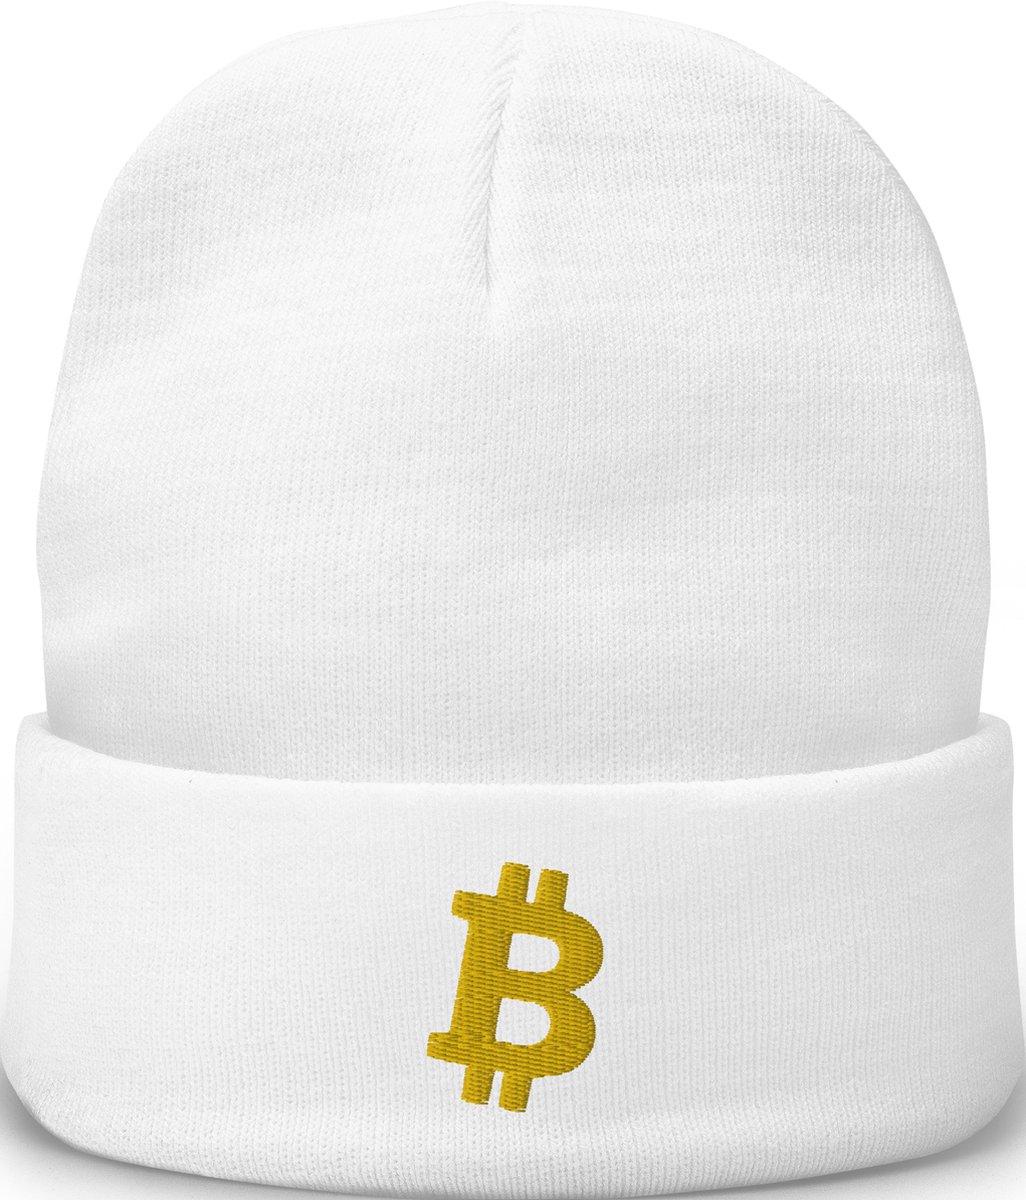 Witte Beanie Winter Muts Met Goud Kleurig Geborduurd Bitcoin Logo| Bitcoin cadeau| Crypto cadeau| Bitcoin Muts| Crypto Muts| Bitcoin Beanie| Crypto Beanie| Bitcoin Merch| Crypto Merch| Bitcoin Kleding| Crypto Kleding